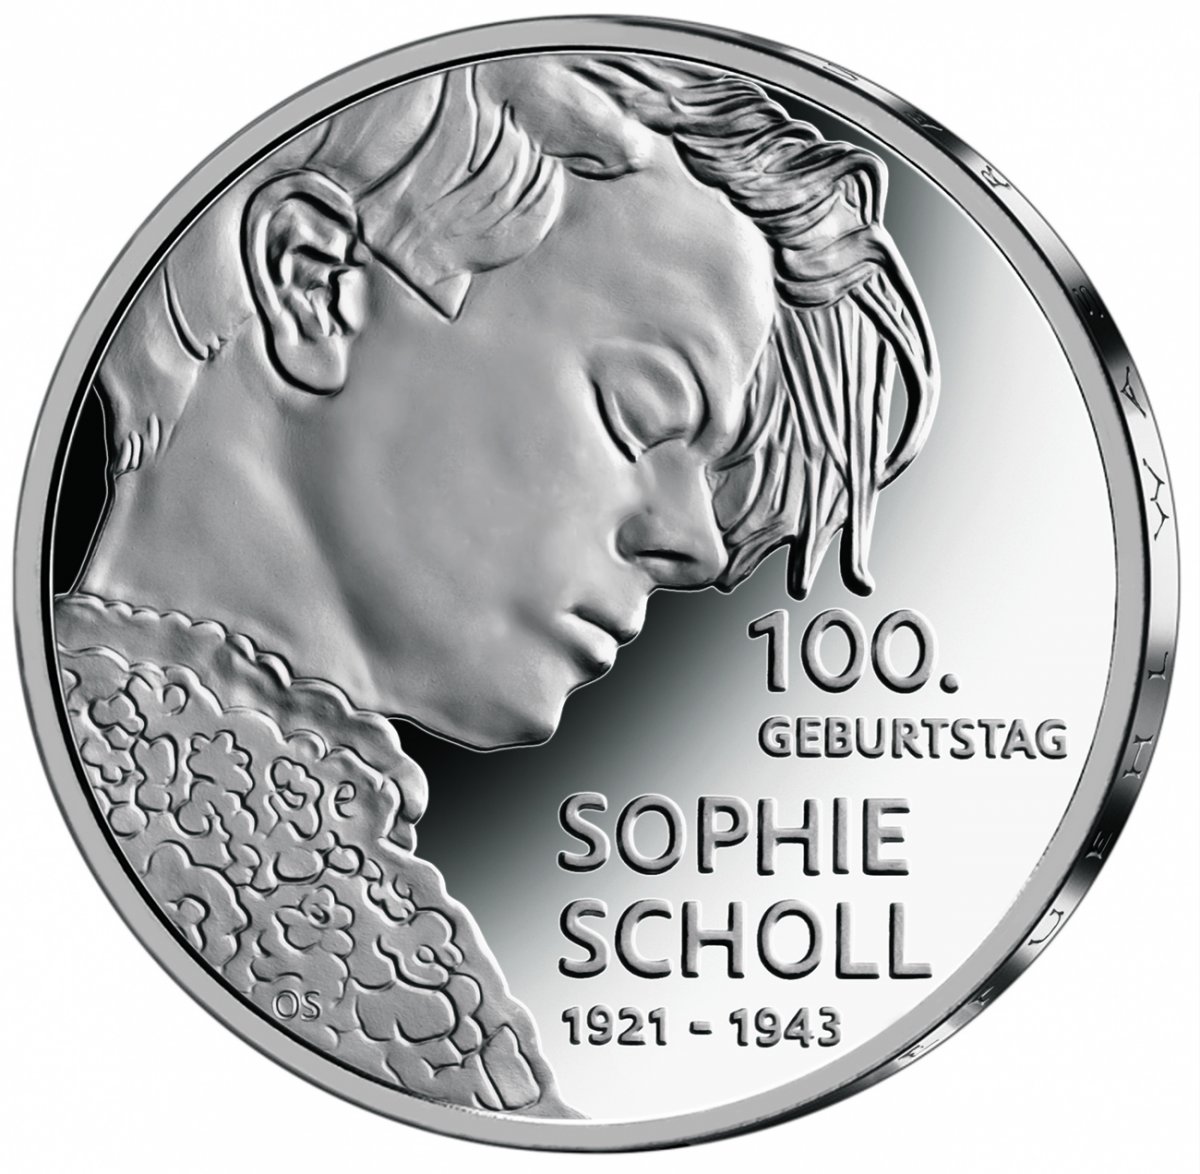 20 euro collector coin 2021 "100. Geburtstag Sophie Scholl" 